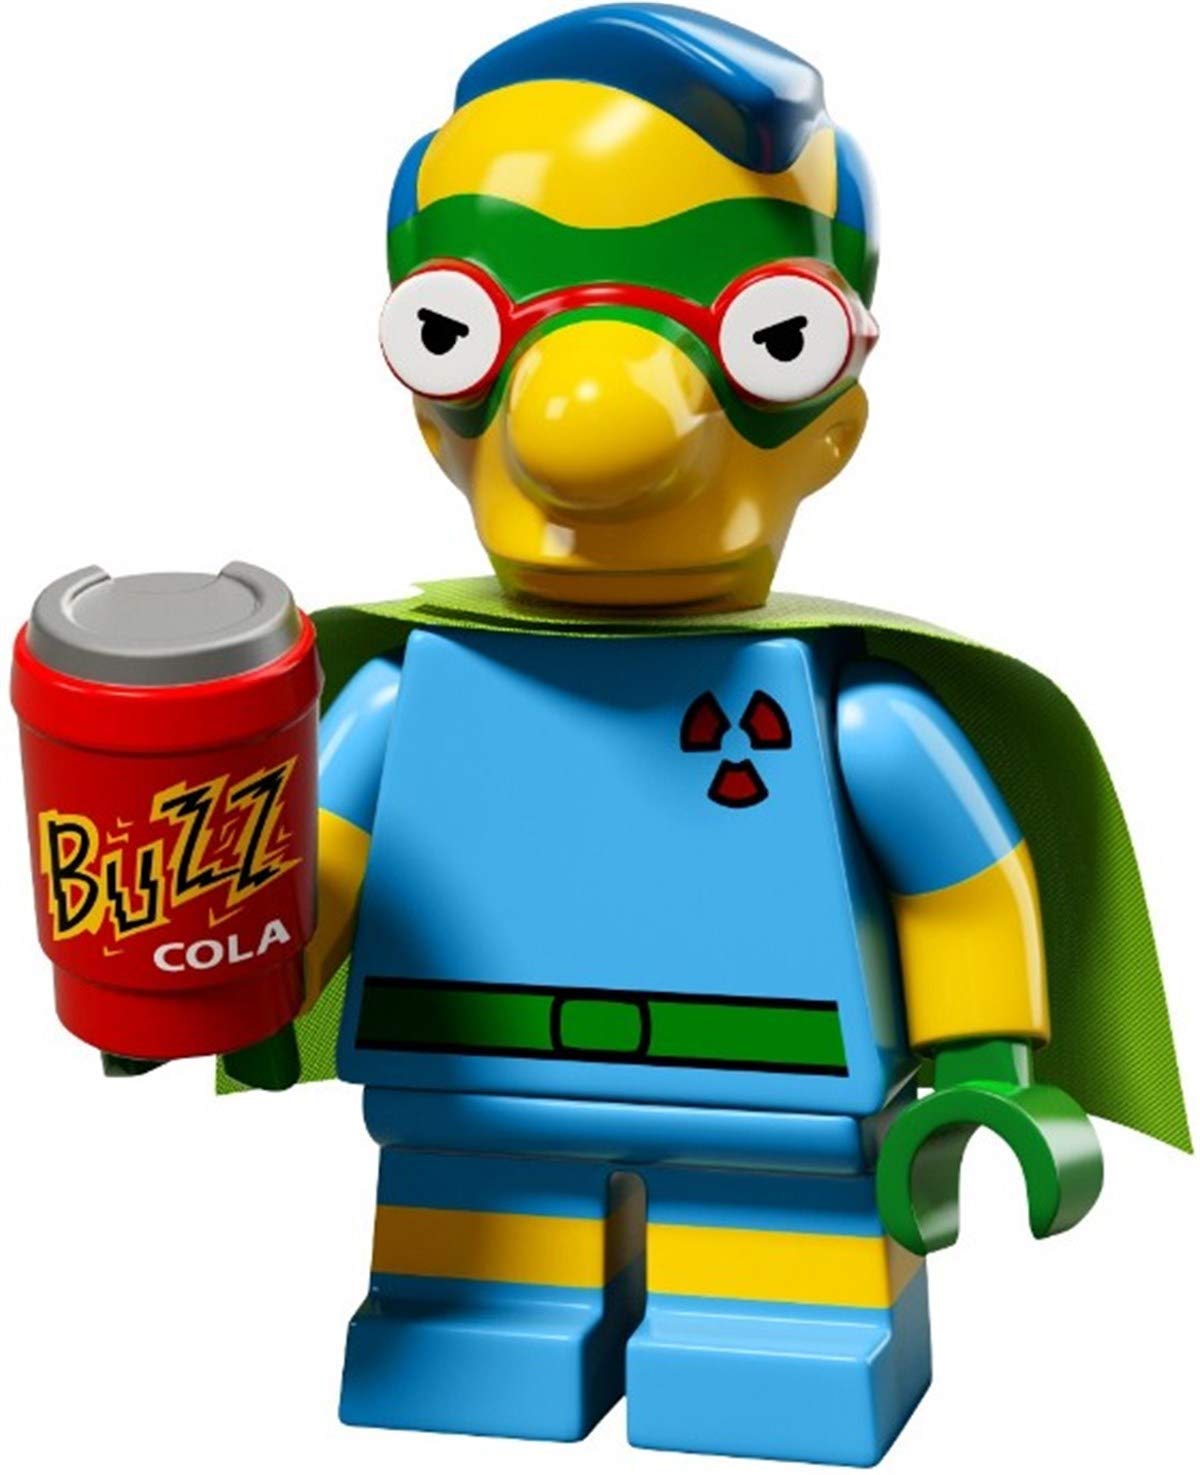 Lego Simpsons Series 2 Collectible Minif Igure 71009 – Milhouse (Fallout Bo